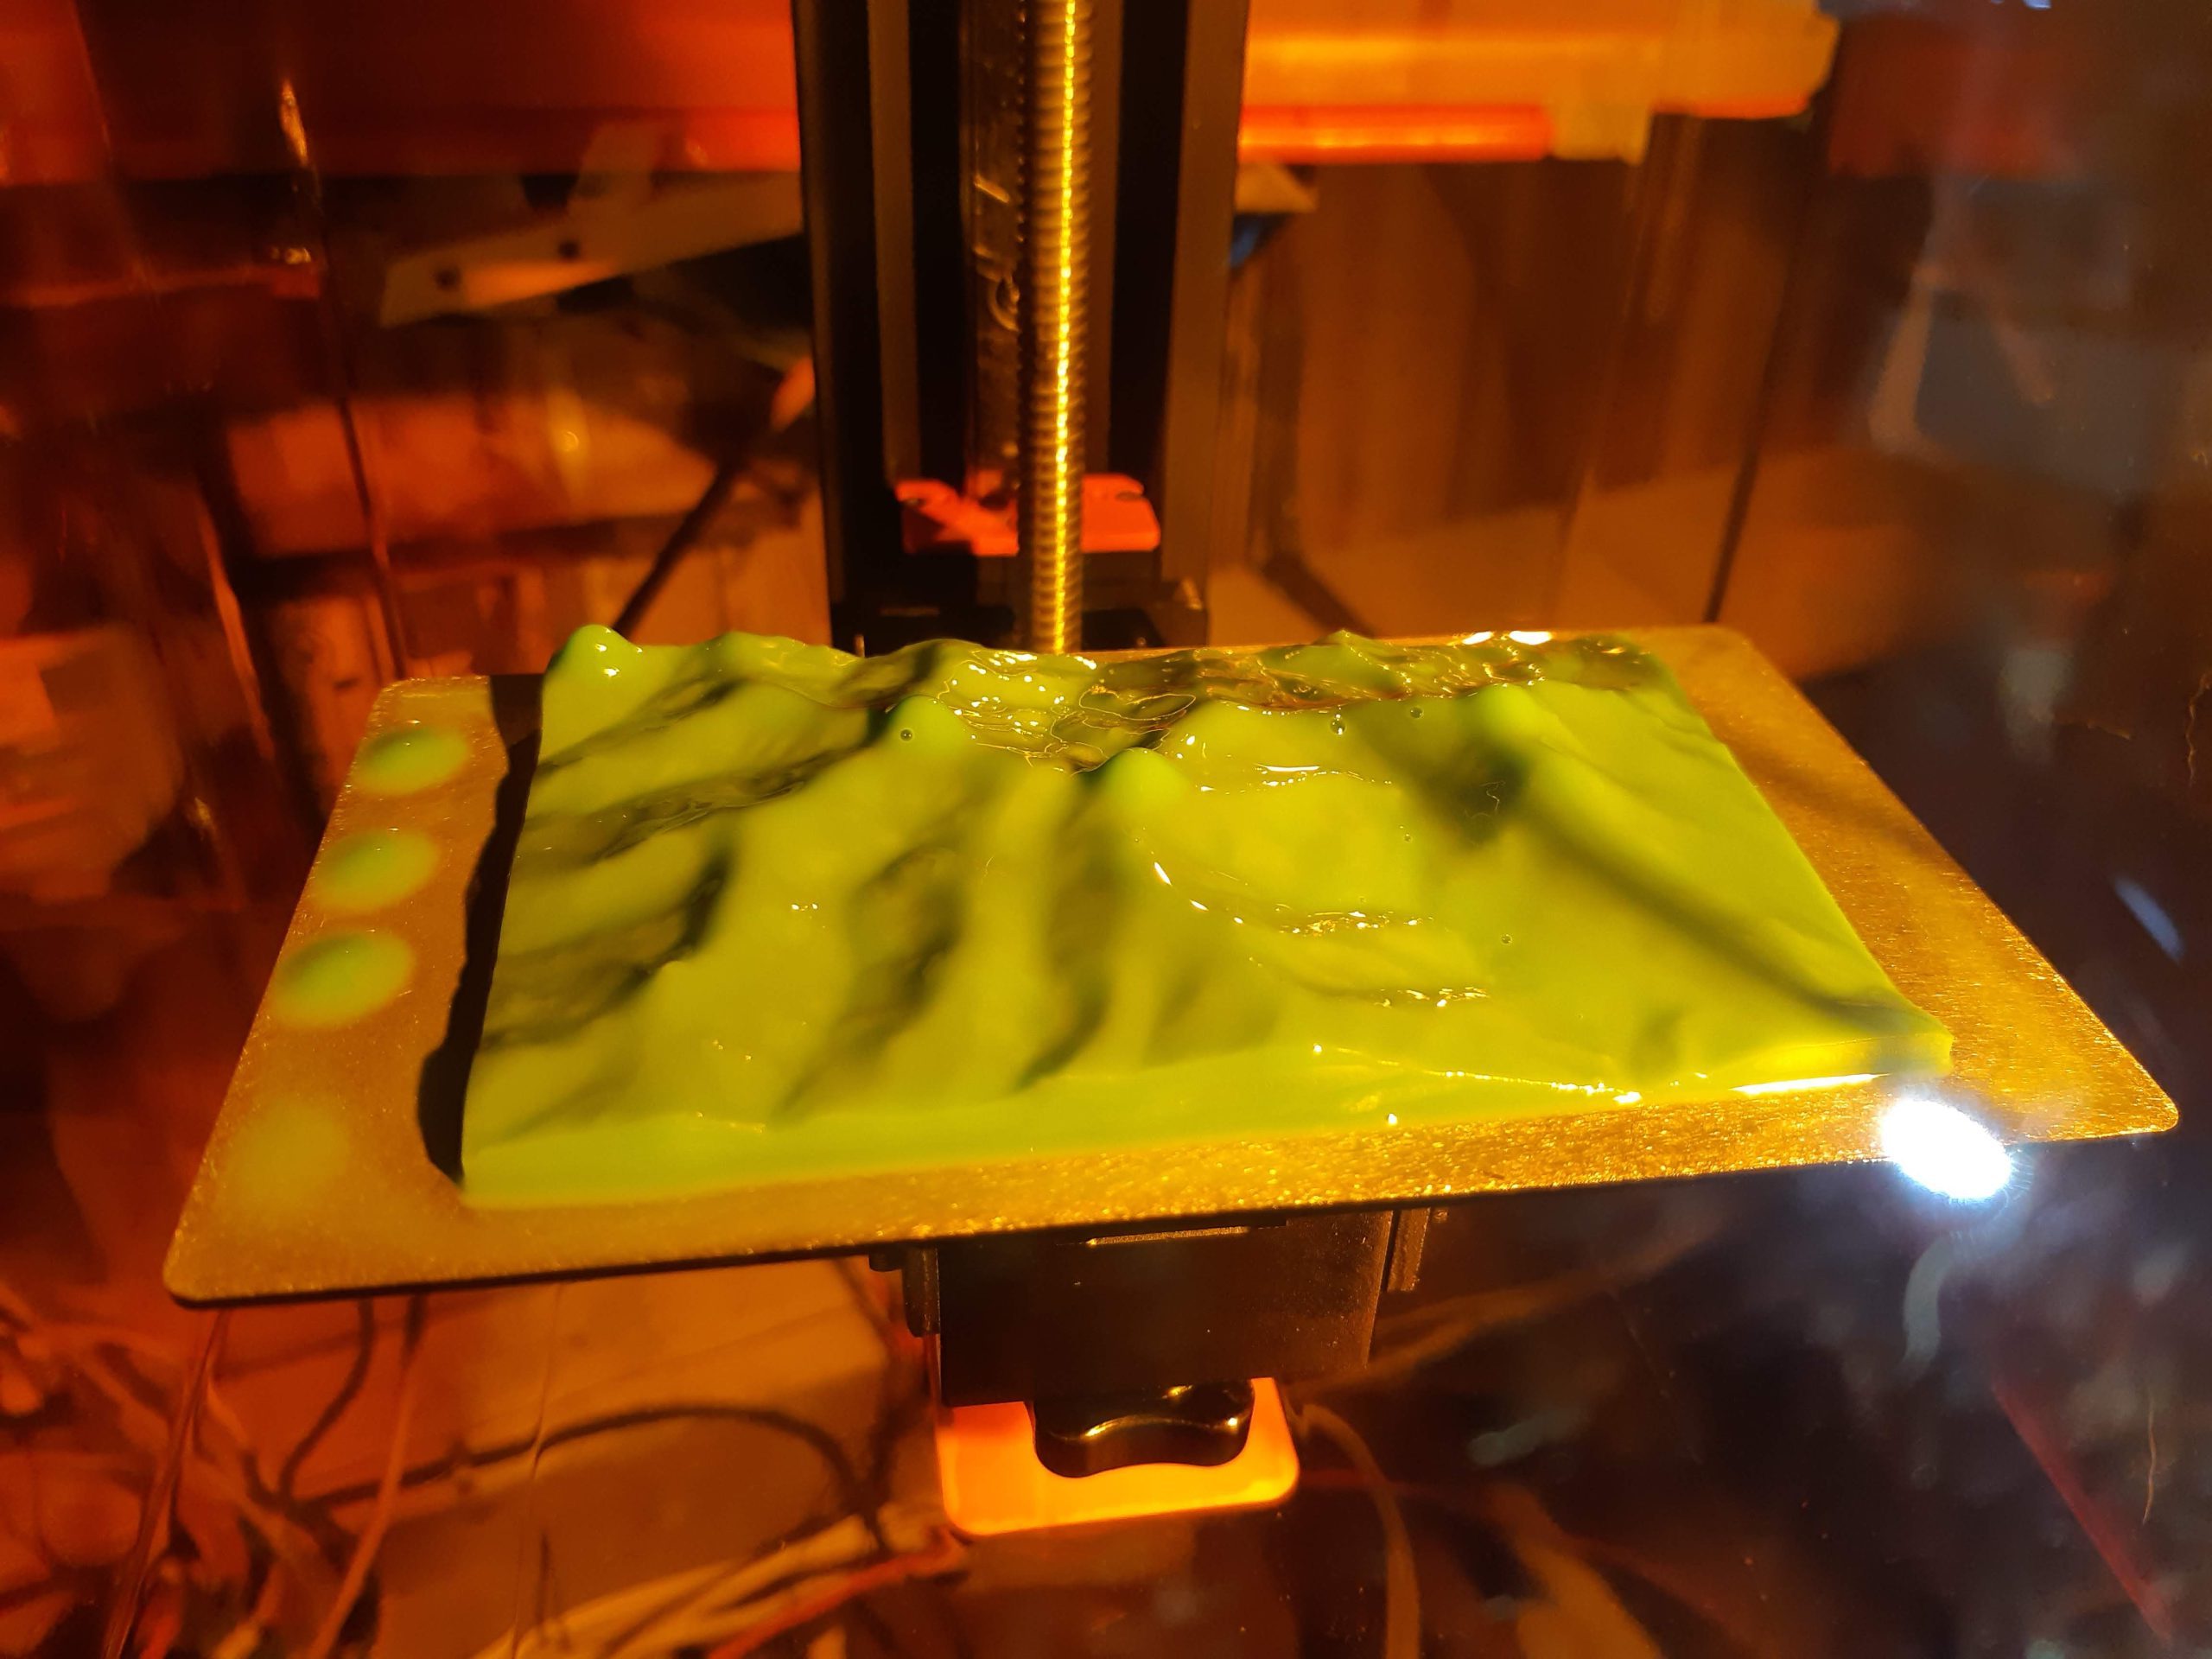 3D terrain model in printer